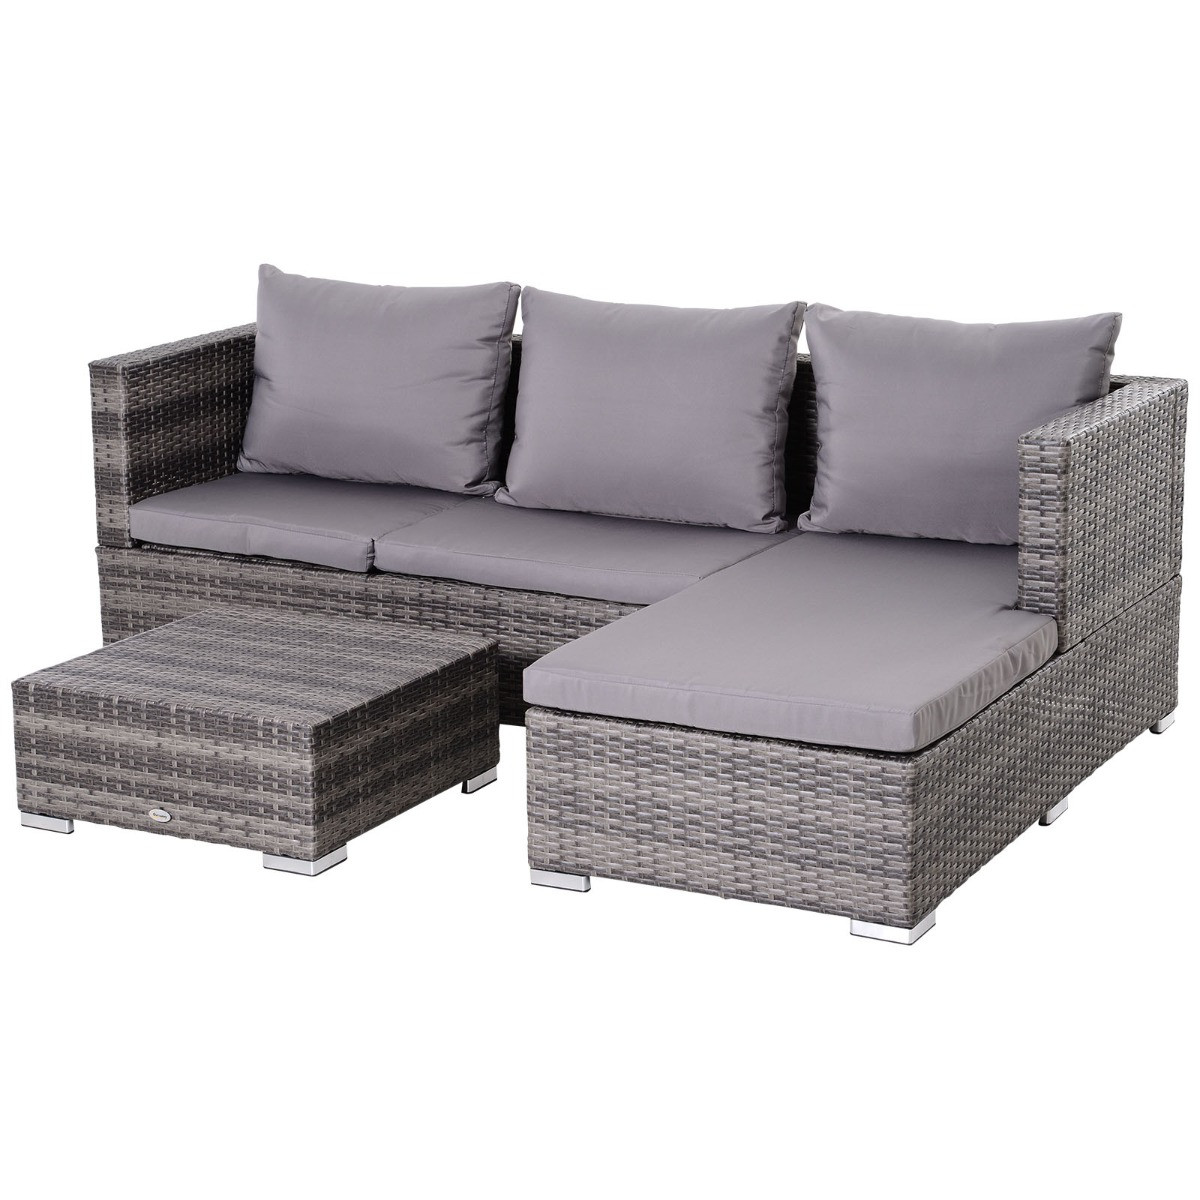 Outsunny Rattan L Shaped Sofa Set, Grey - 4 Seater>